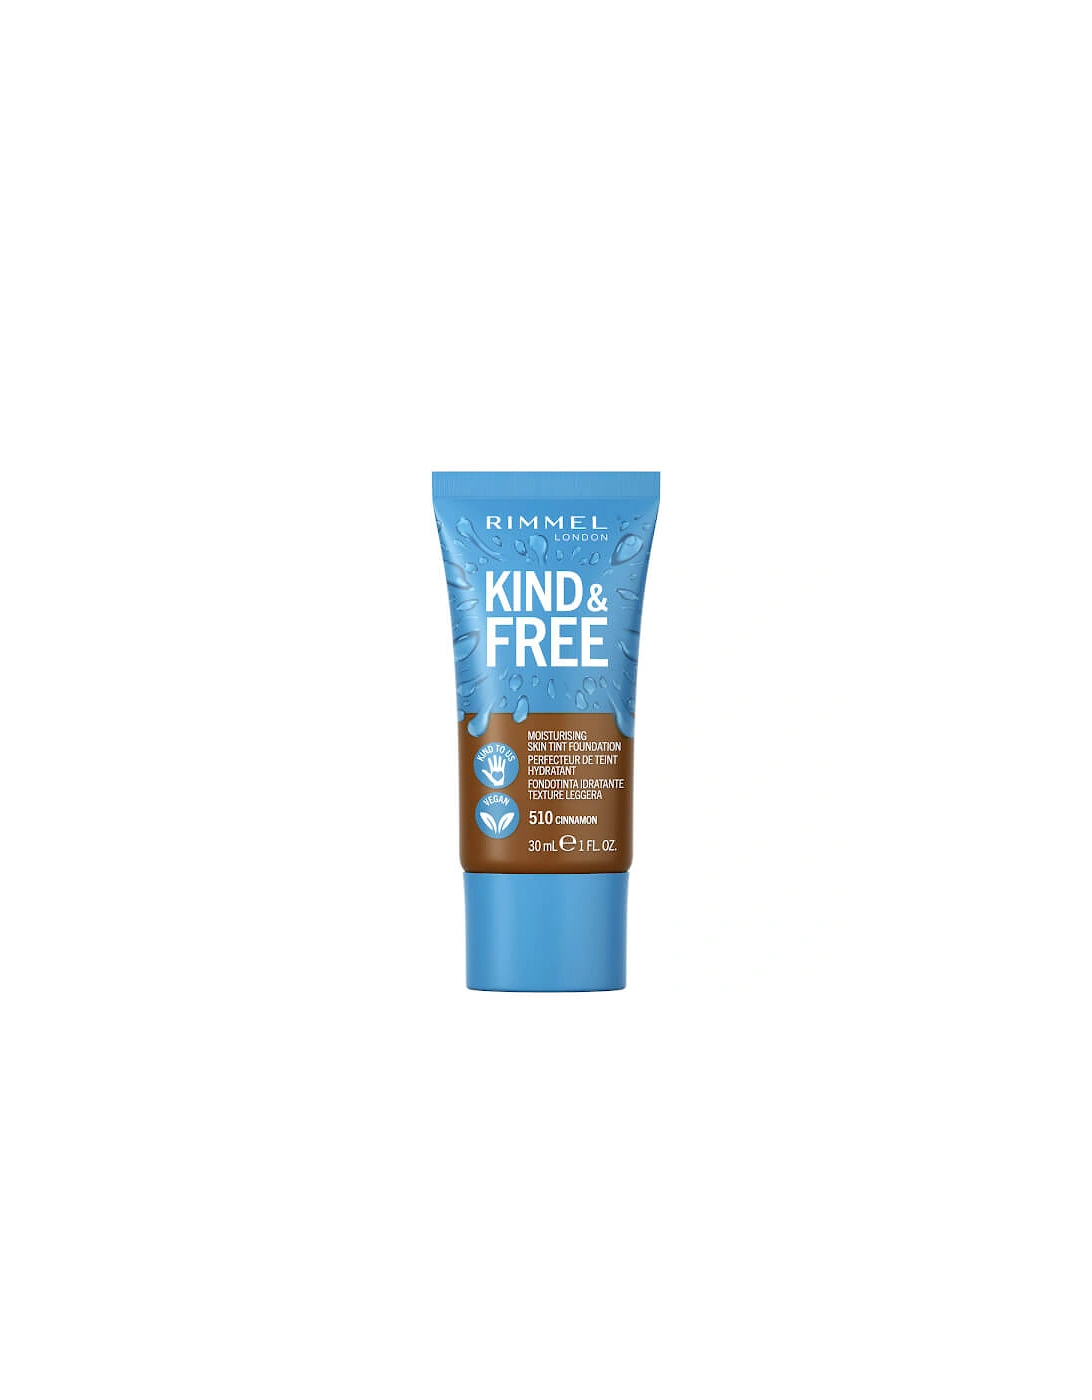 Kind and Free Skin Tint Moisturising Foundation - Cinnamon, 2 of 1